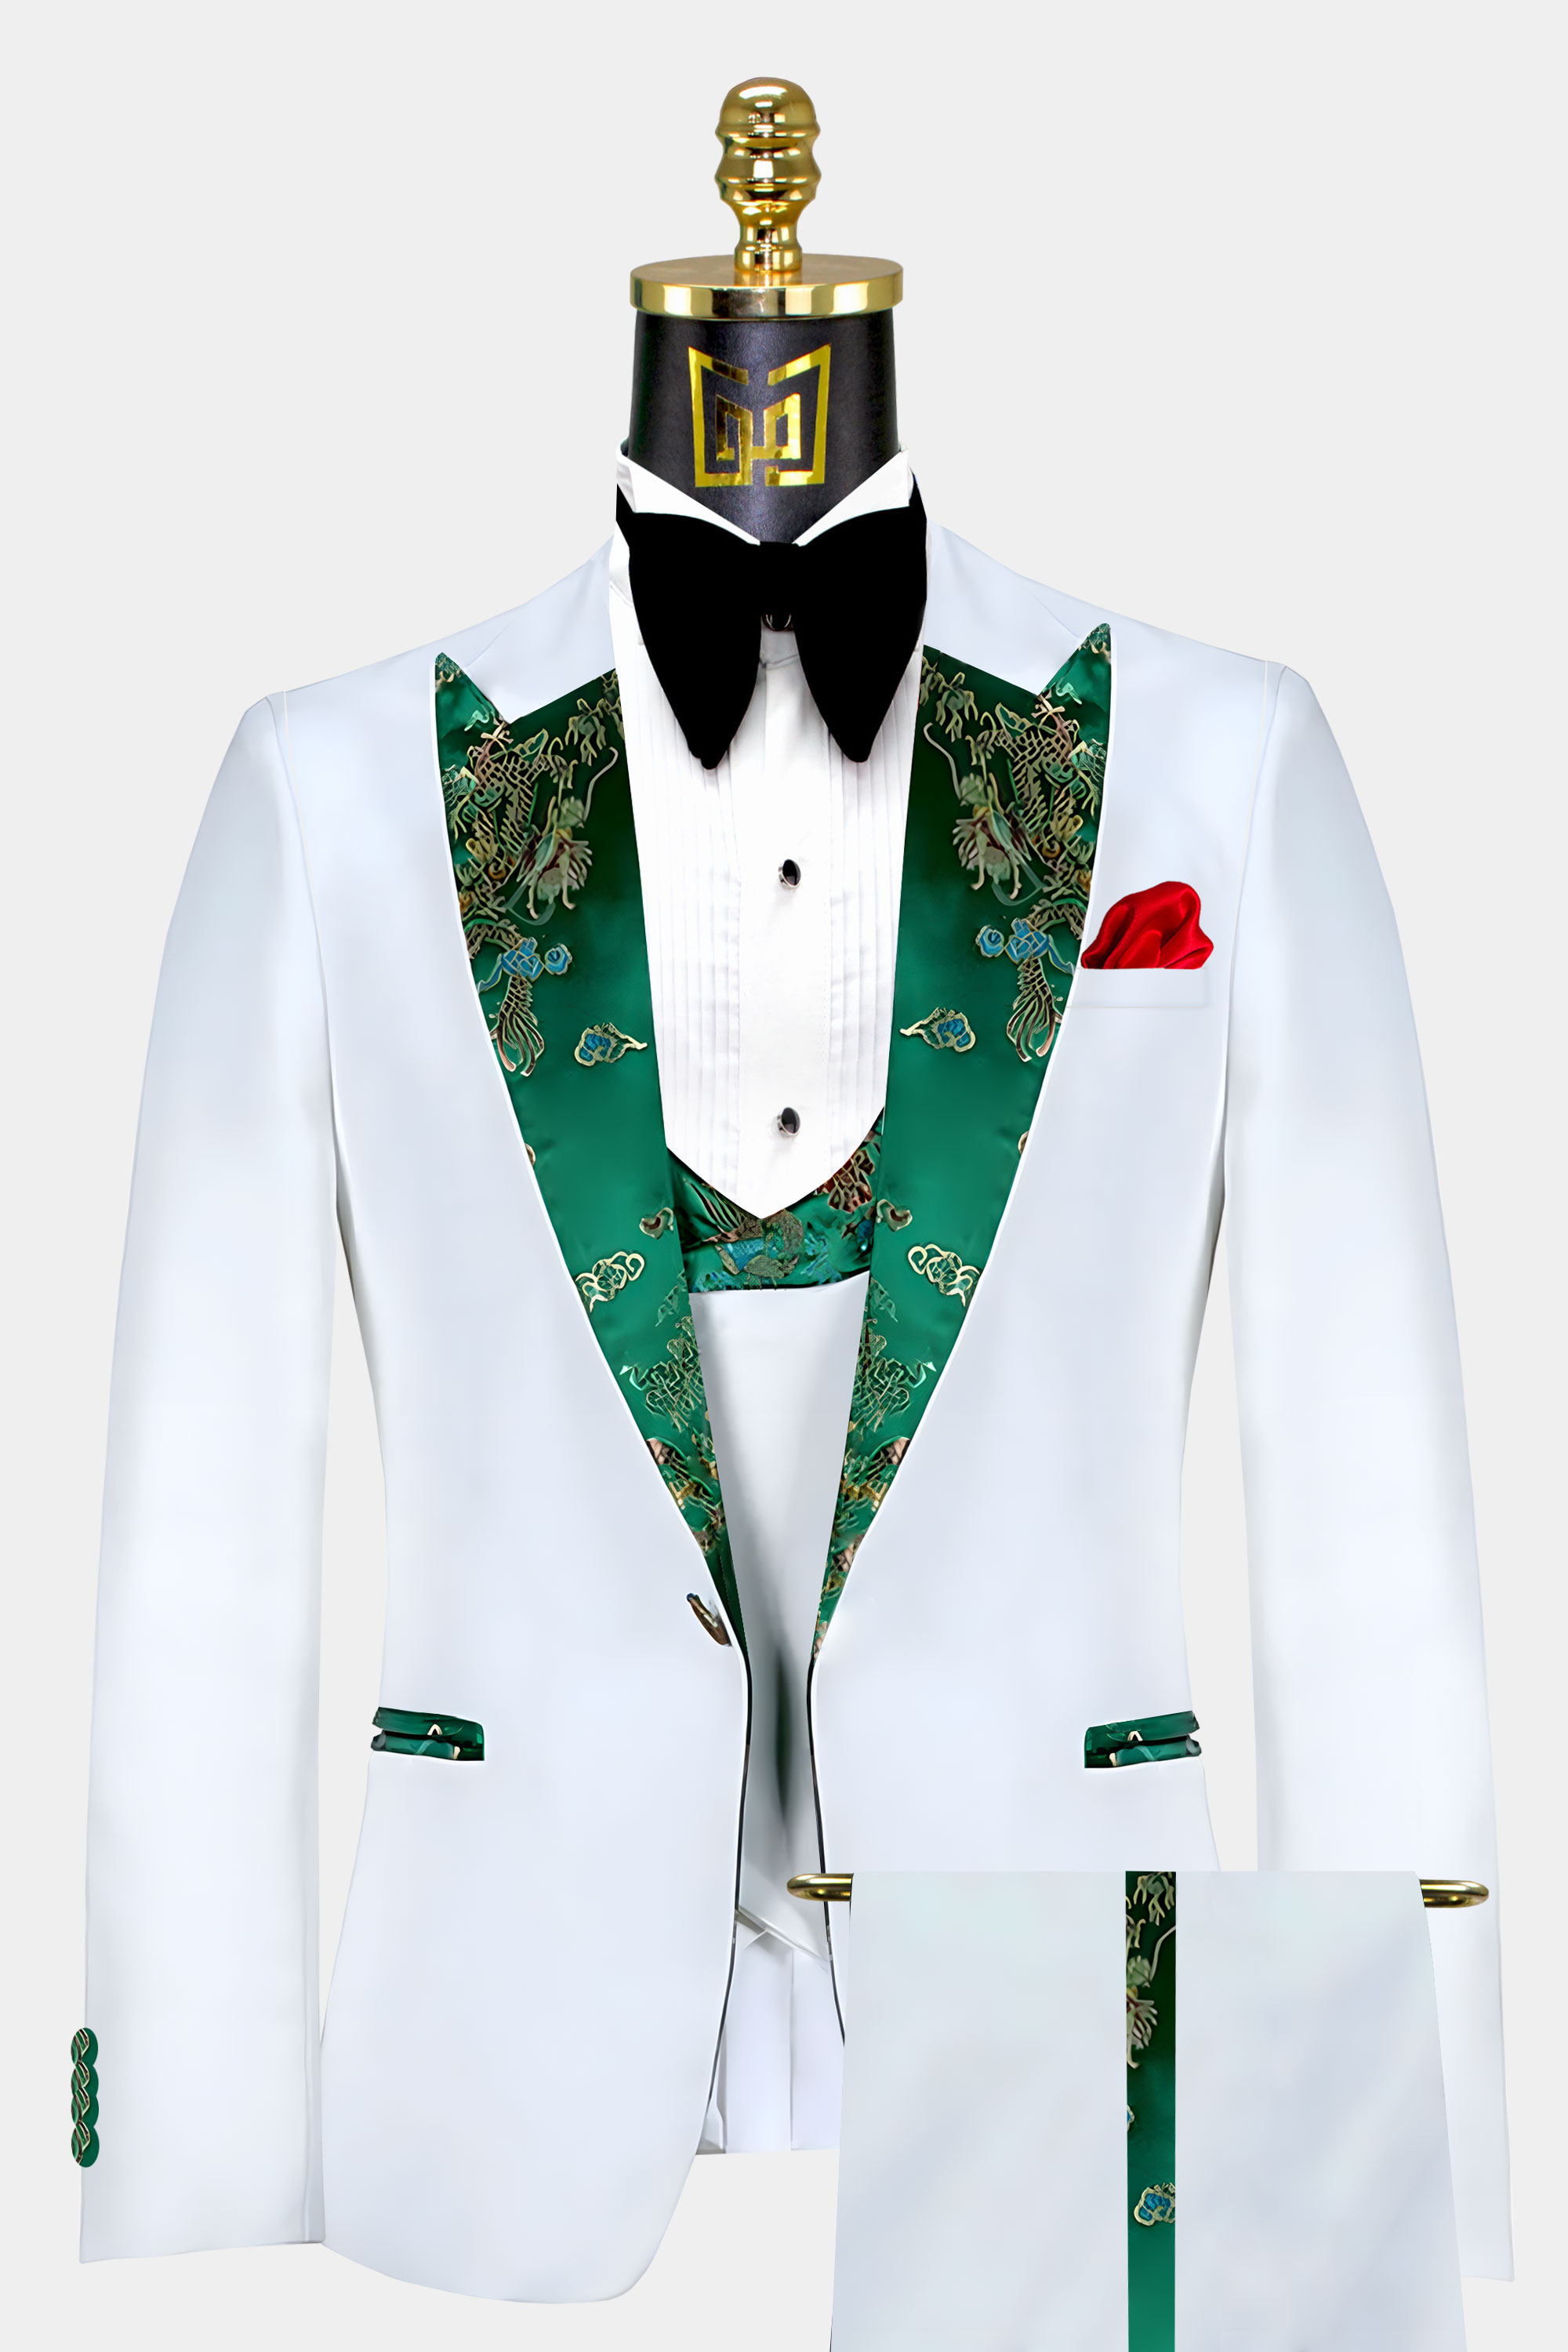 White Tuxedo with Green Floral Trim - 3 Piece